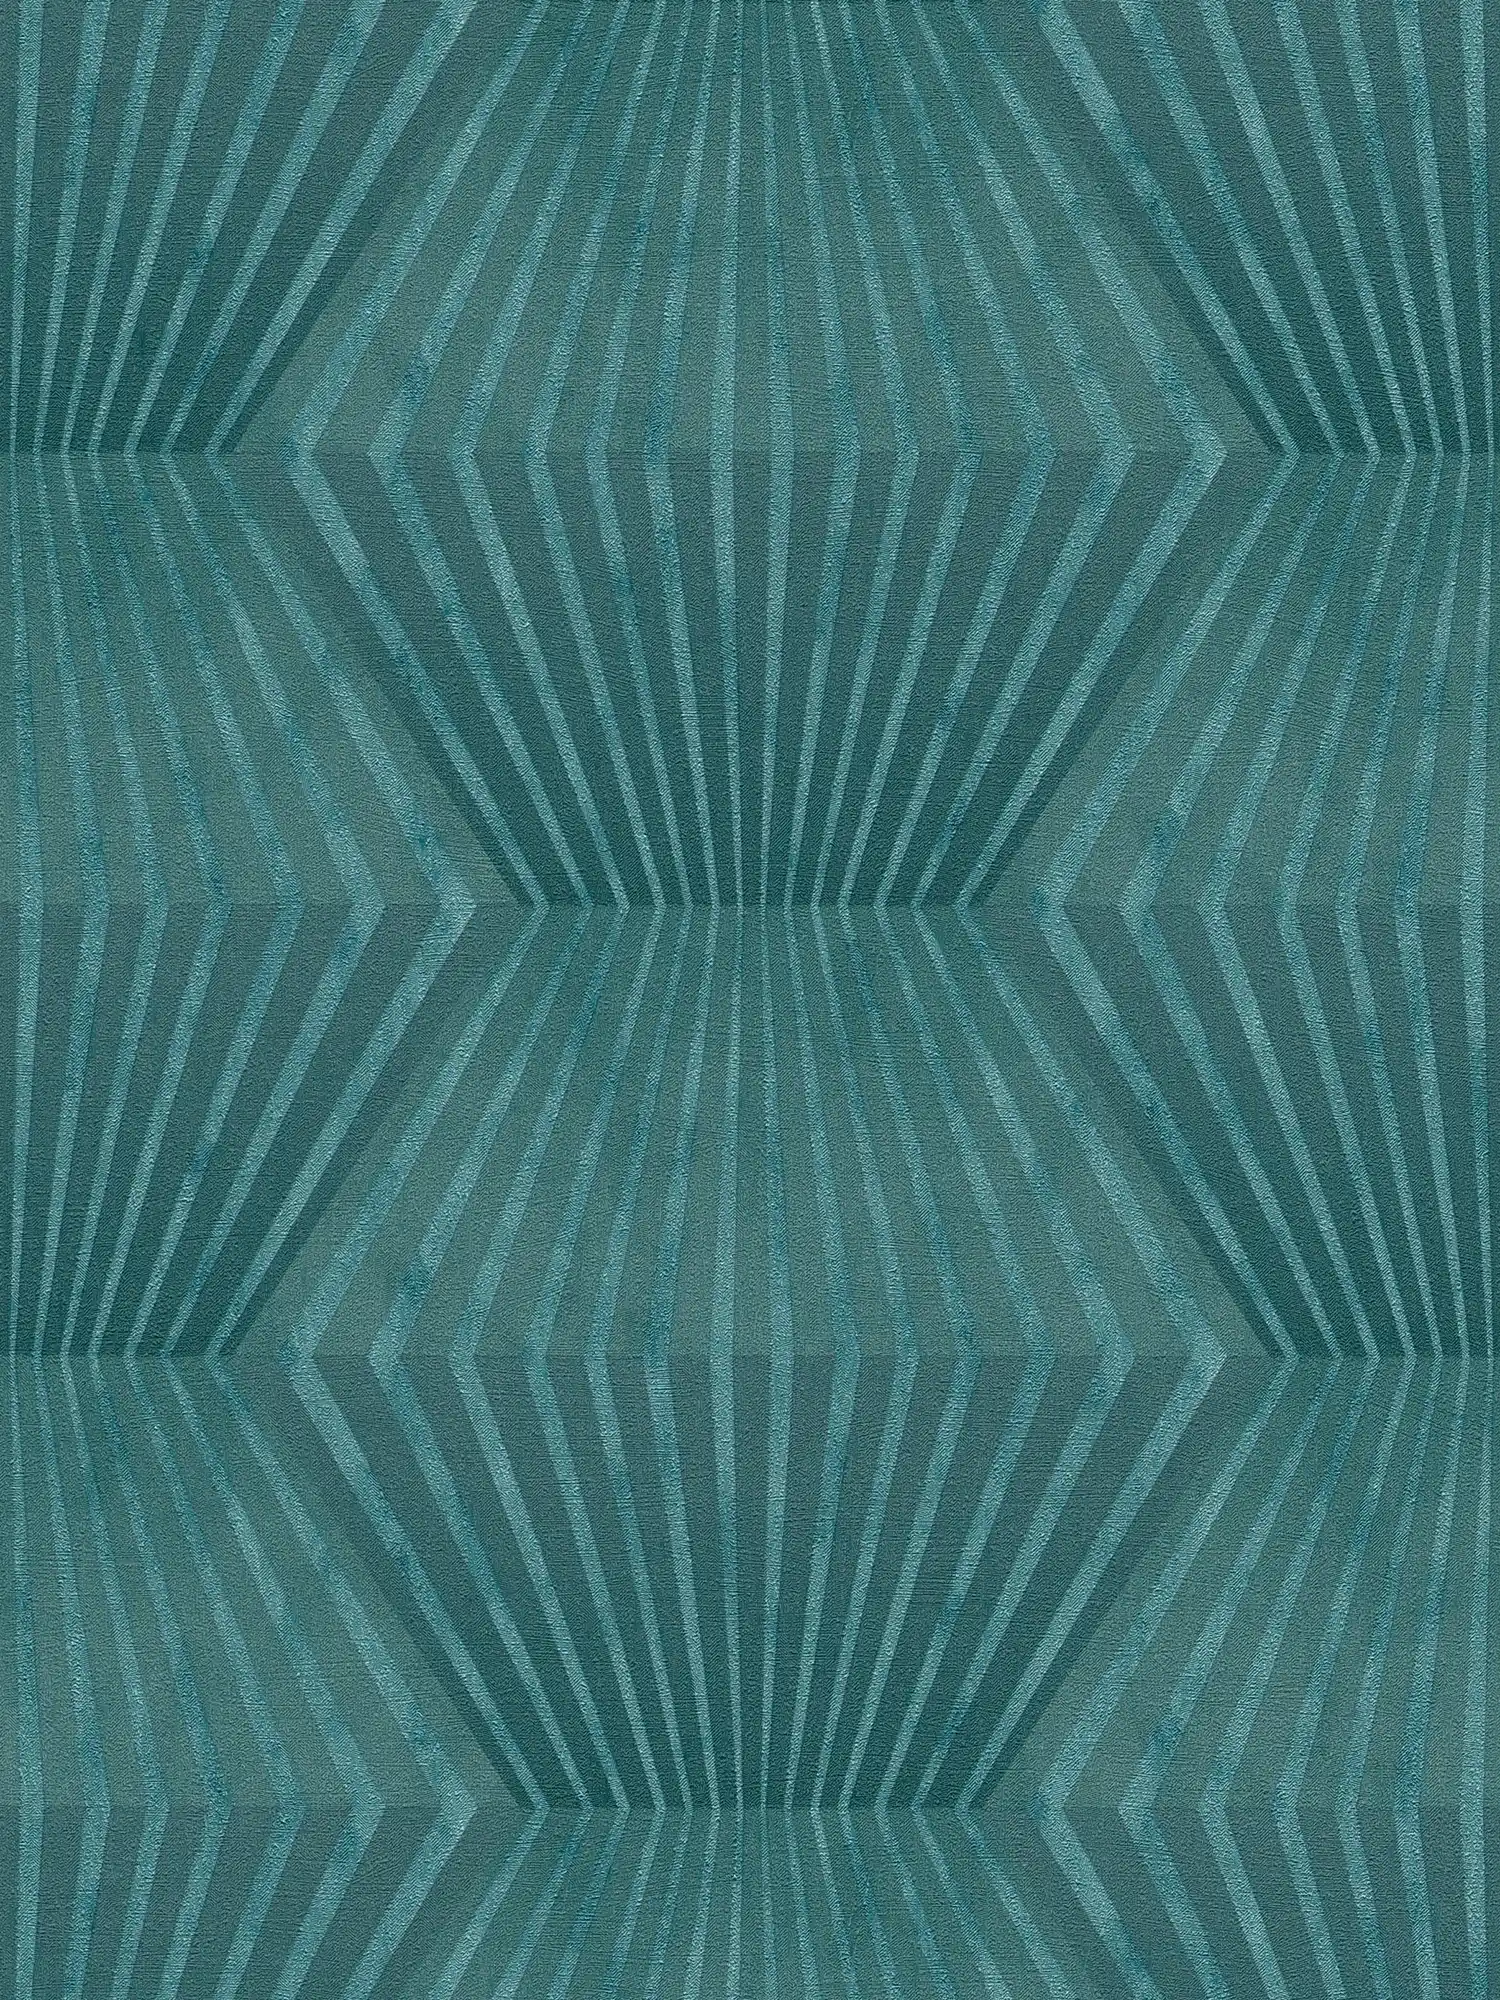 Art deco wallpaper with line pattern & metallic whole - Green
